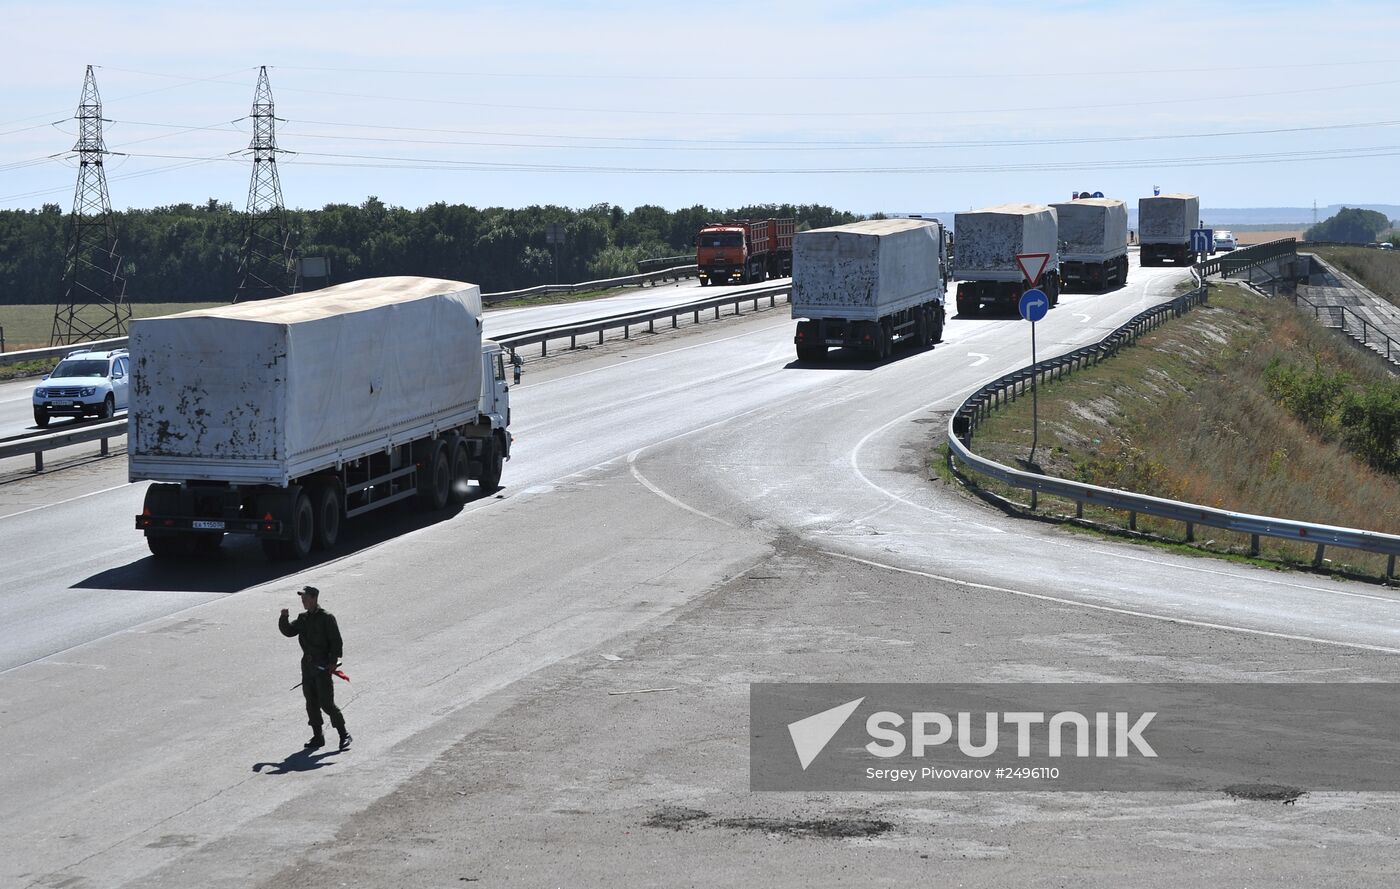 Russia's third humanitarian aid convoy prepared in Rostov region